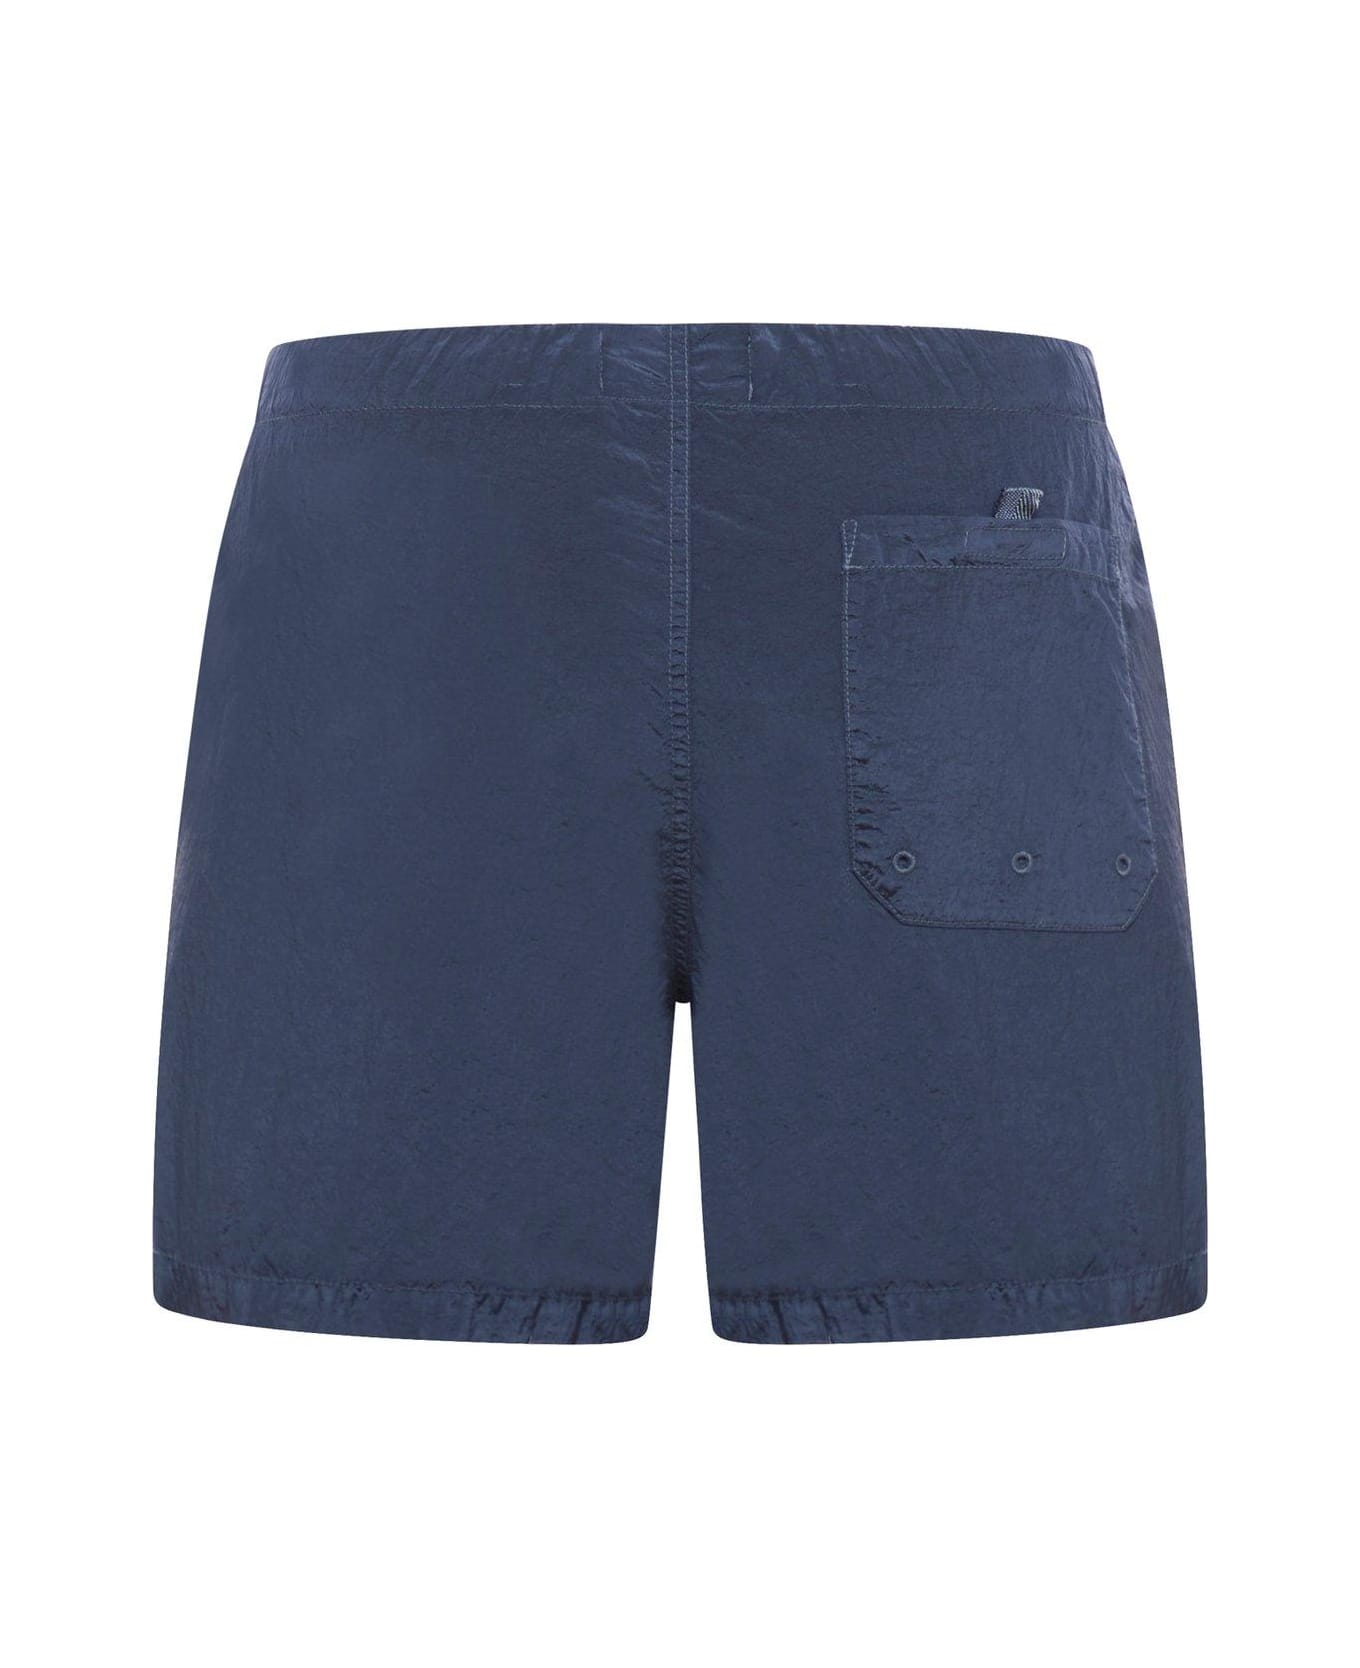 Stone Island Logo Patch Drawstring Shorts - Blue